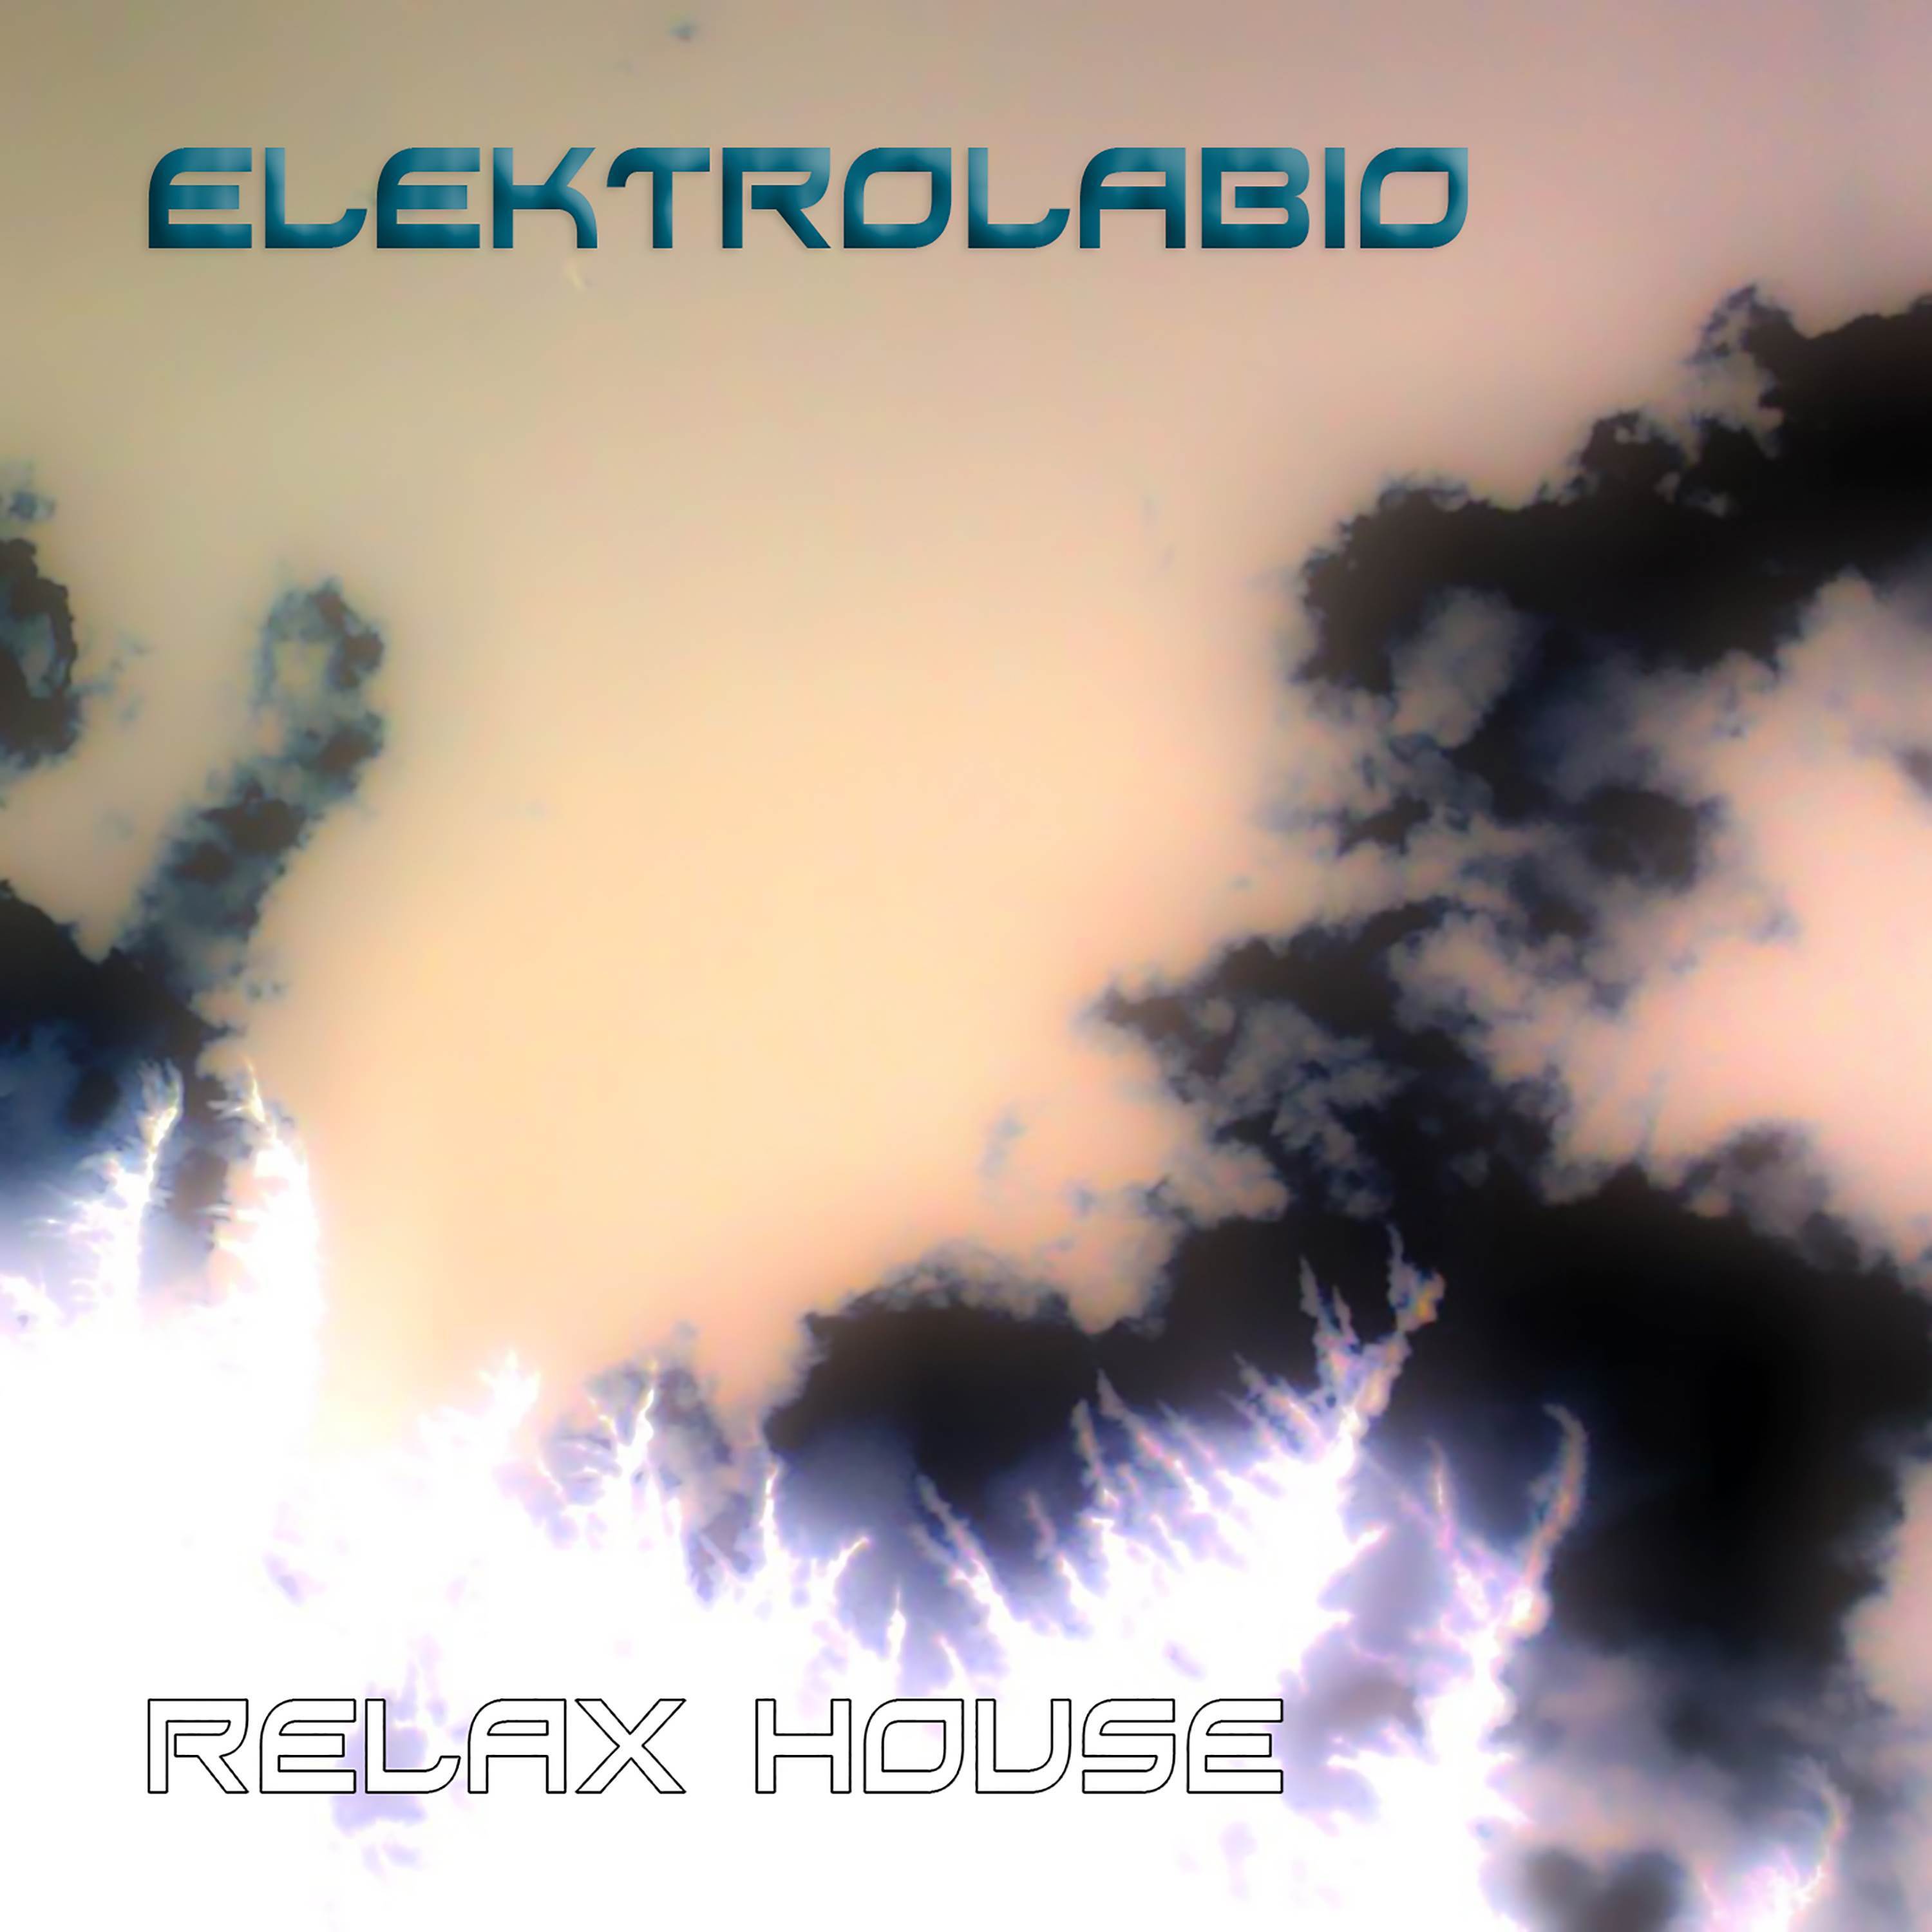 Elektrolabio - Relax House